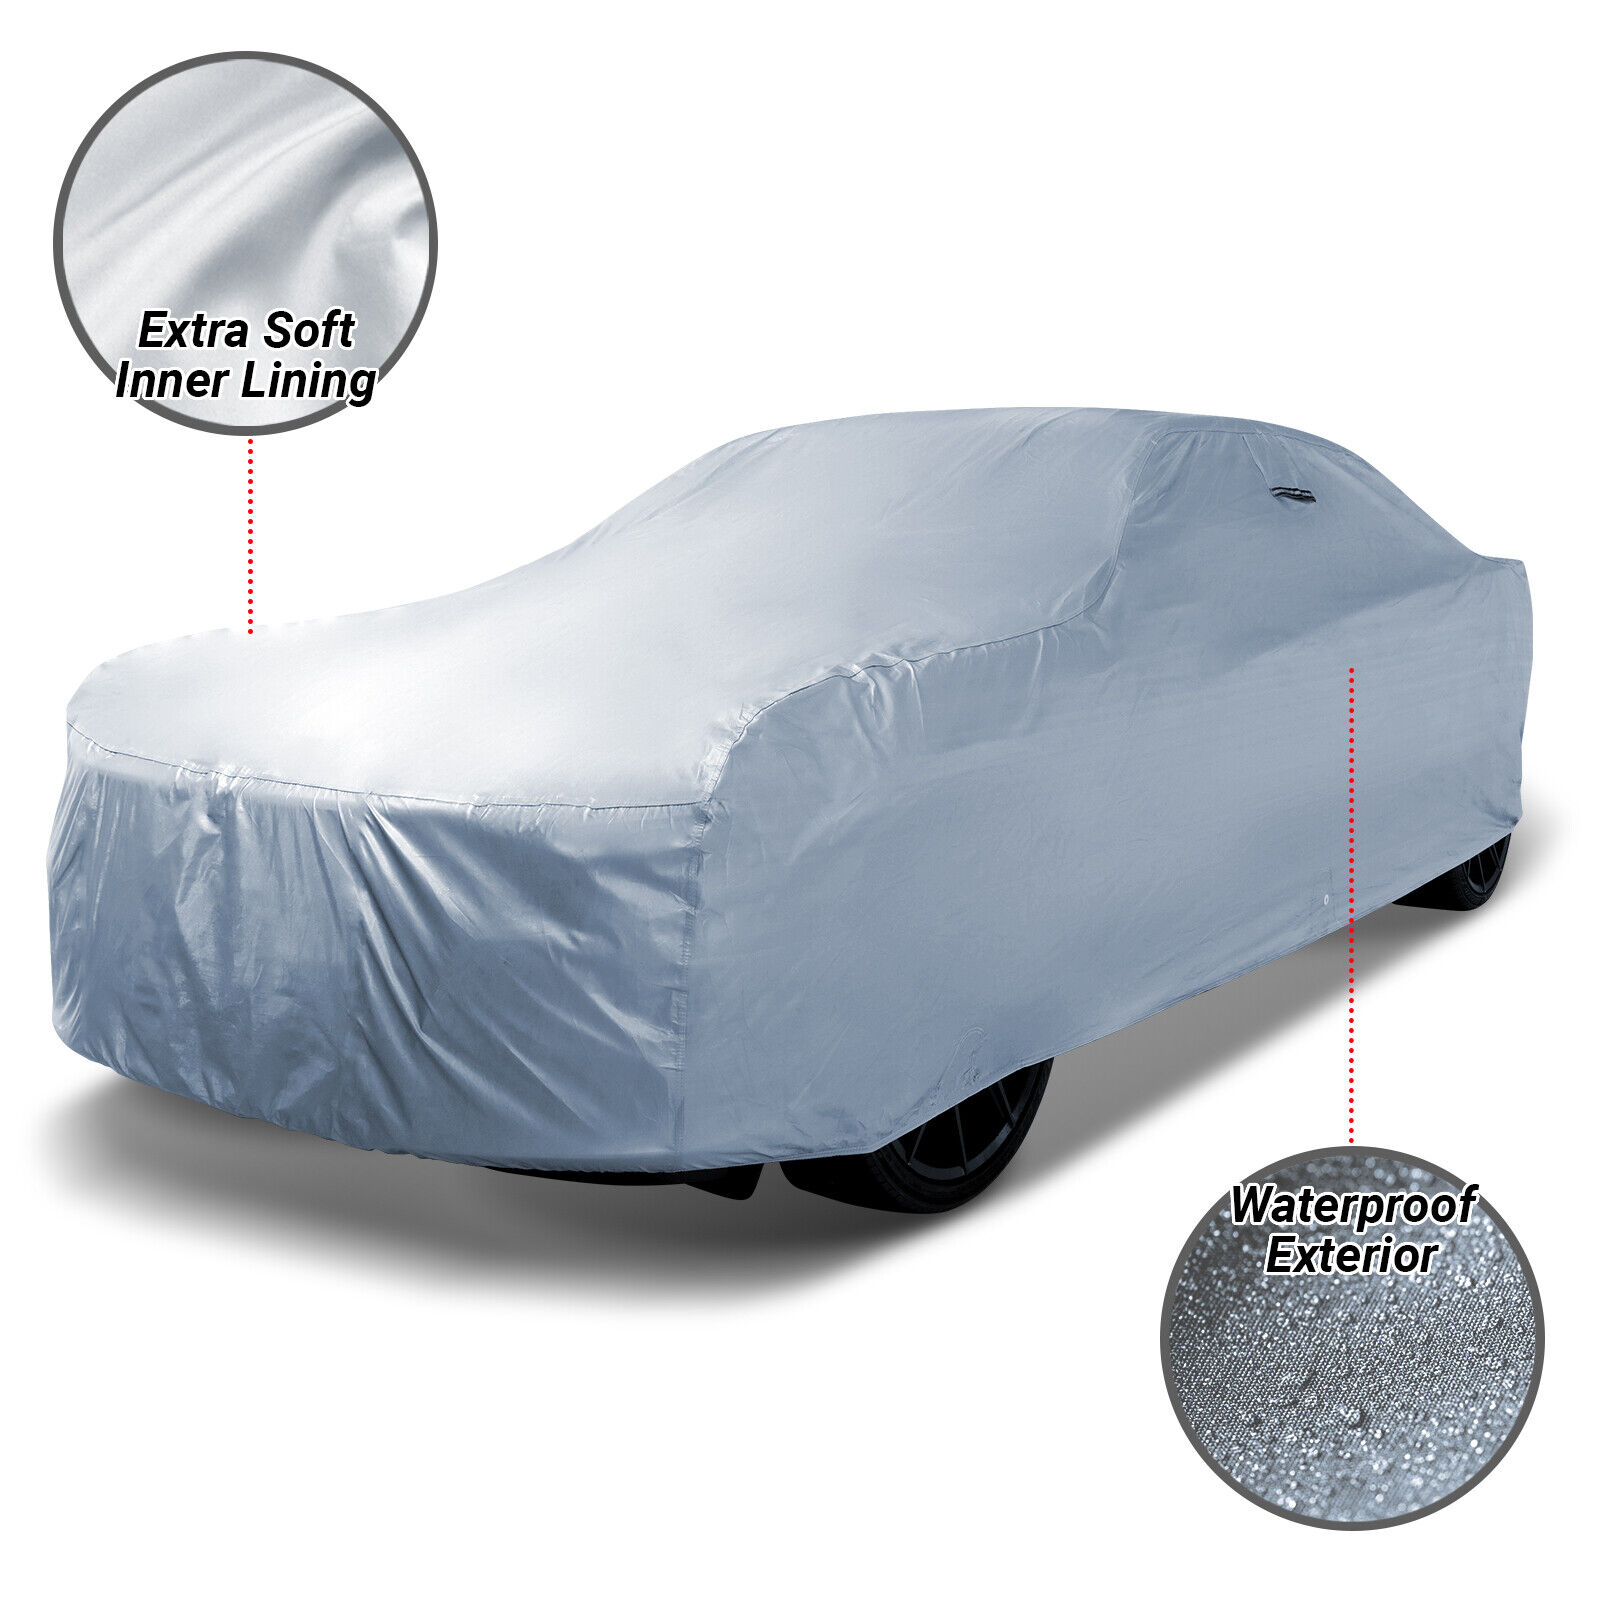 Fits MG [OUTDOOR] CAR COVER ☑️ Weatherproof ☑️ 100% Warranty ☑️ Best